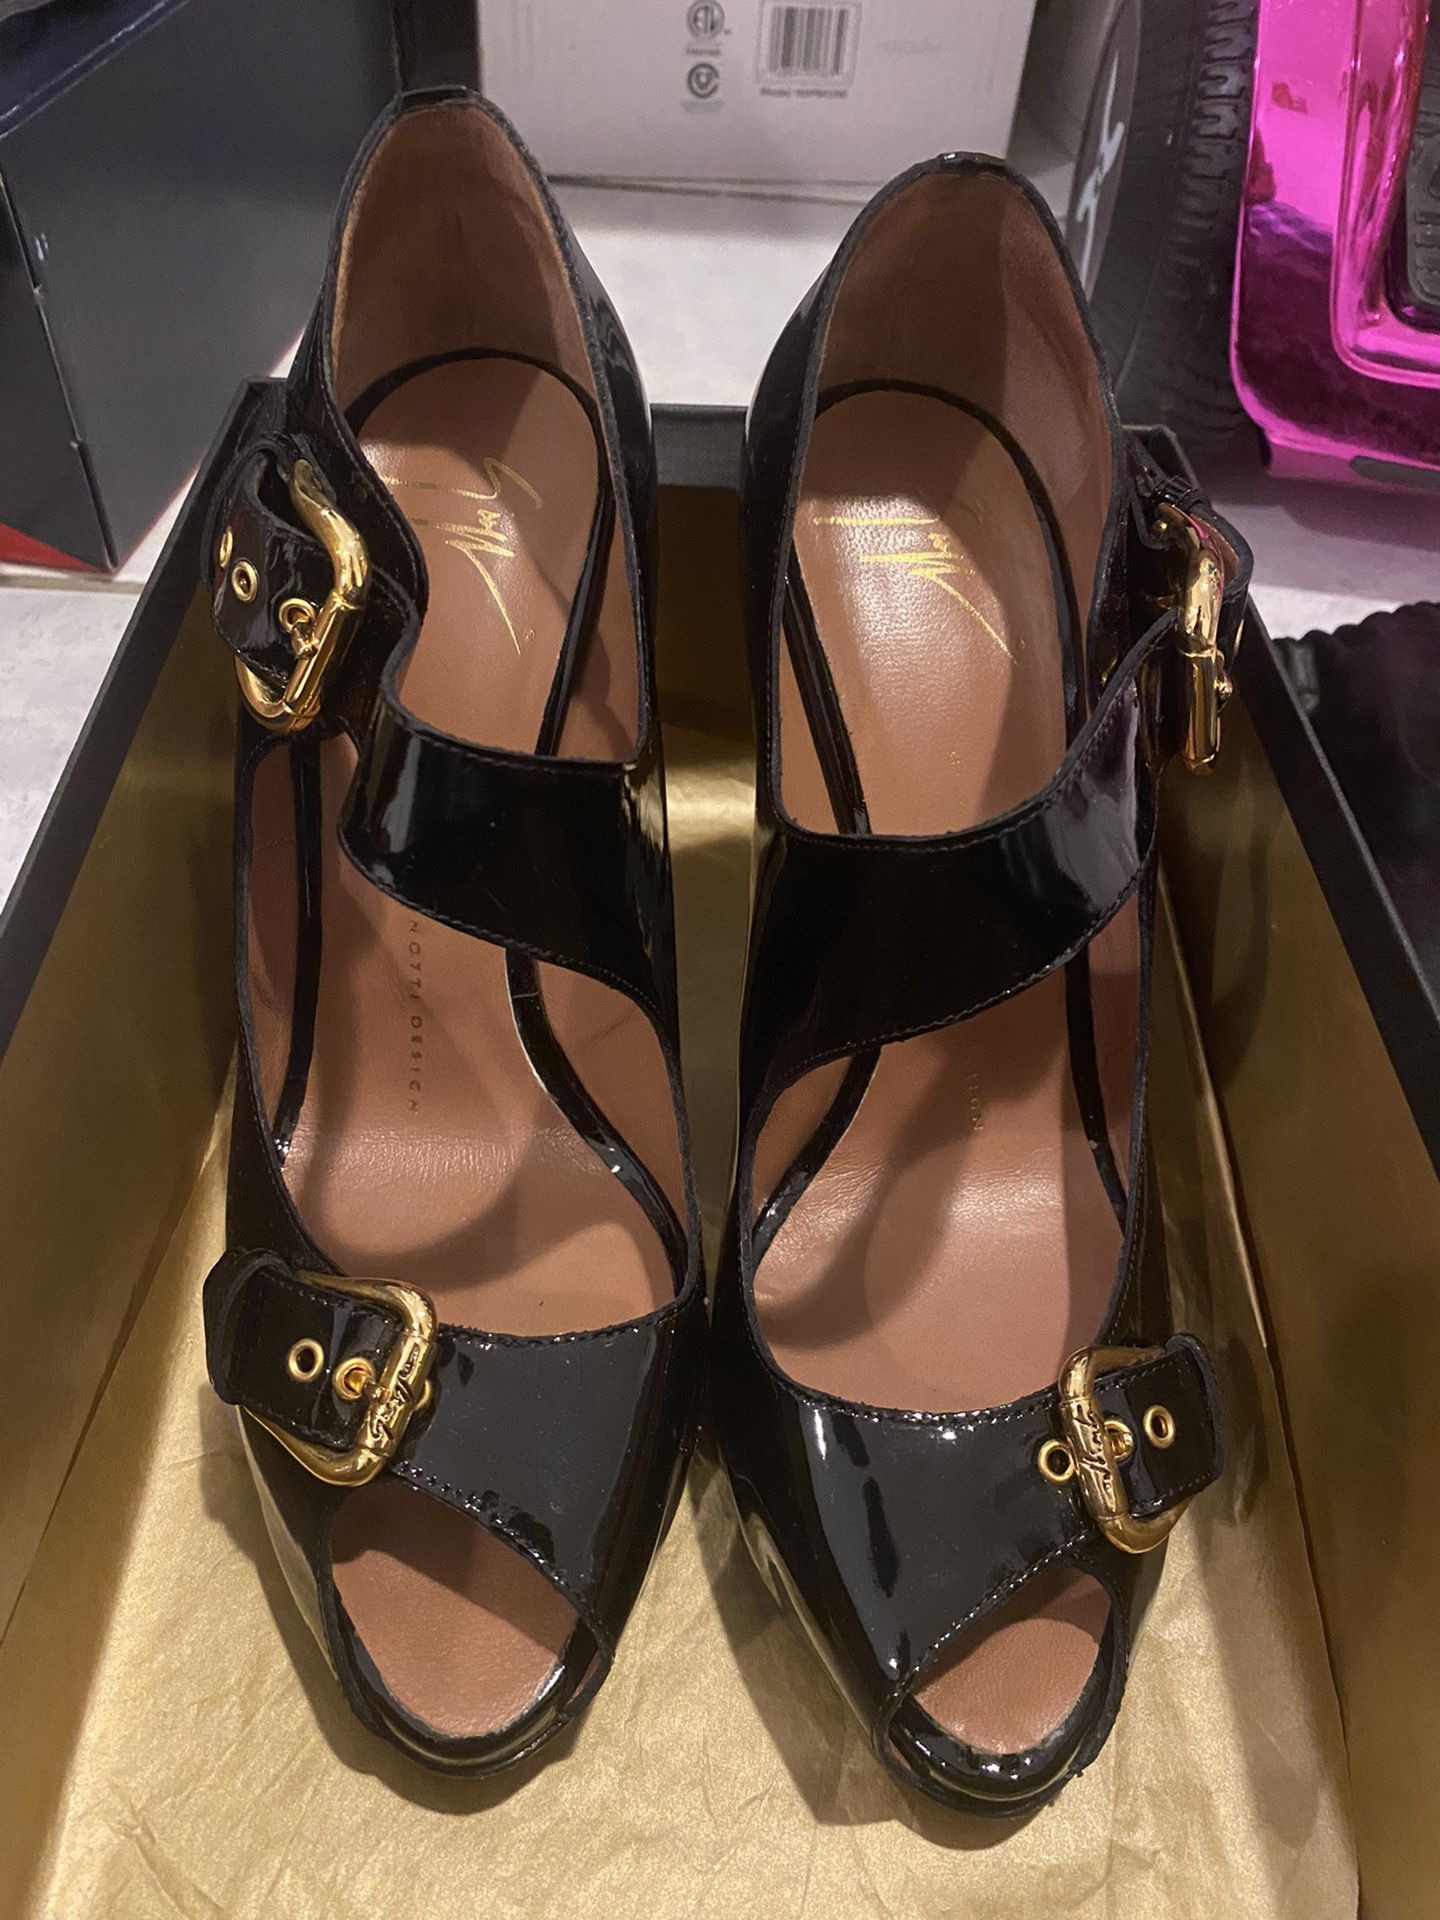 Giuseppe Vero Heels for Sale in - OfferUp